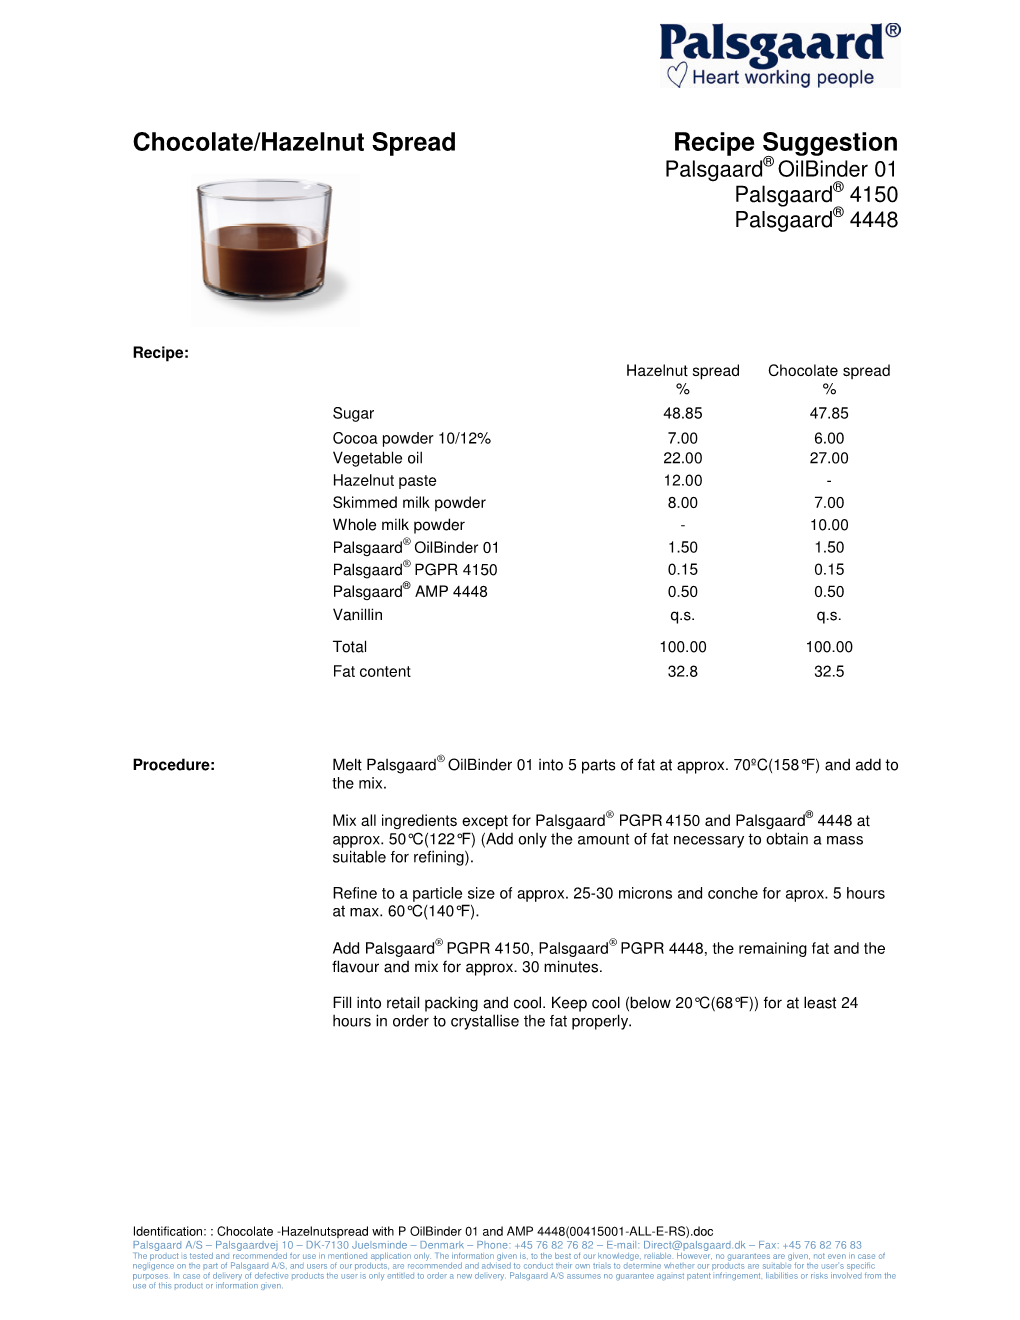 Chocolate/Hazelnut Spread Recipe Suggestion Palsgaard ® Oilbinder 01 Palsgaard ® 4150 Palsgaard ® 4448